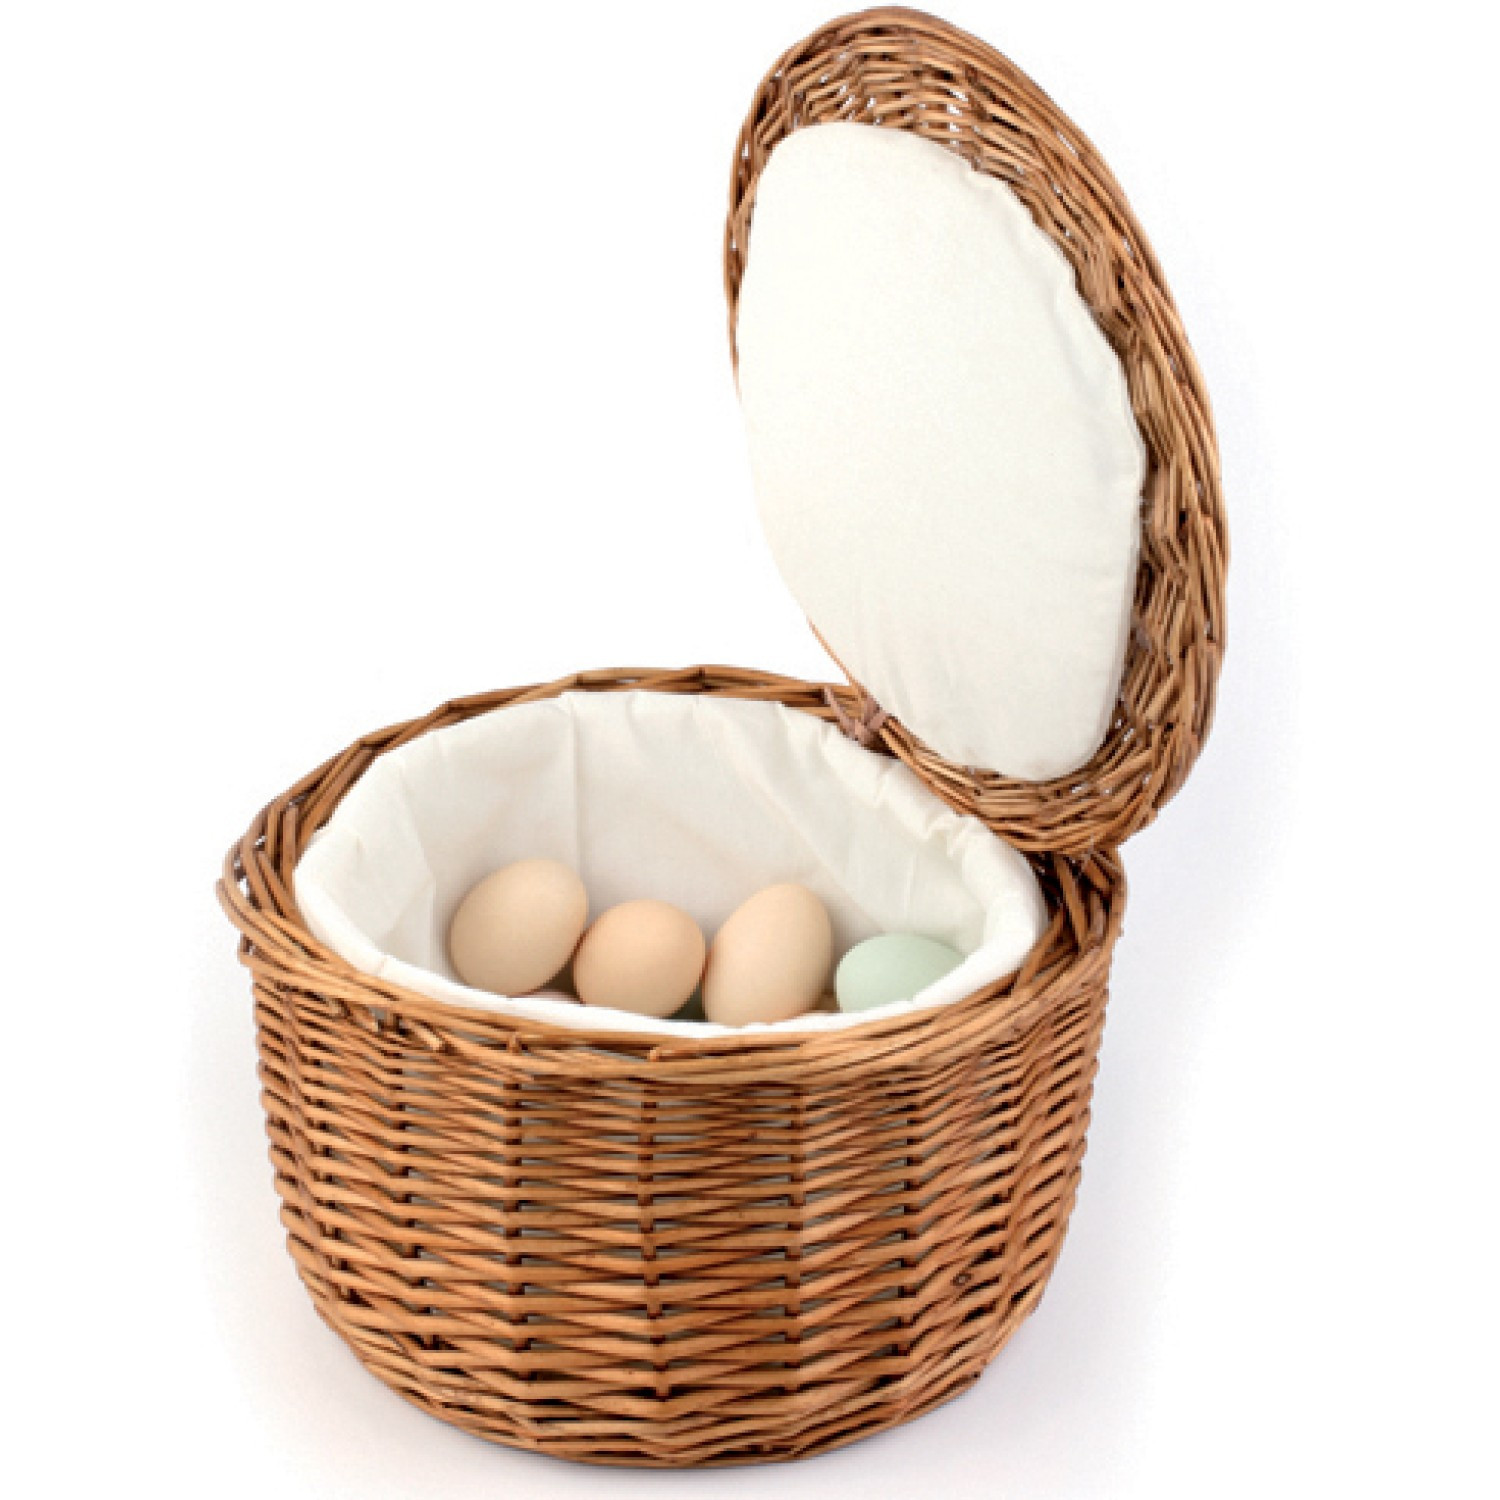 APS Aps Καλάθι αυγών με επένδυση 26cm Σε Φυσικό Χρώμα